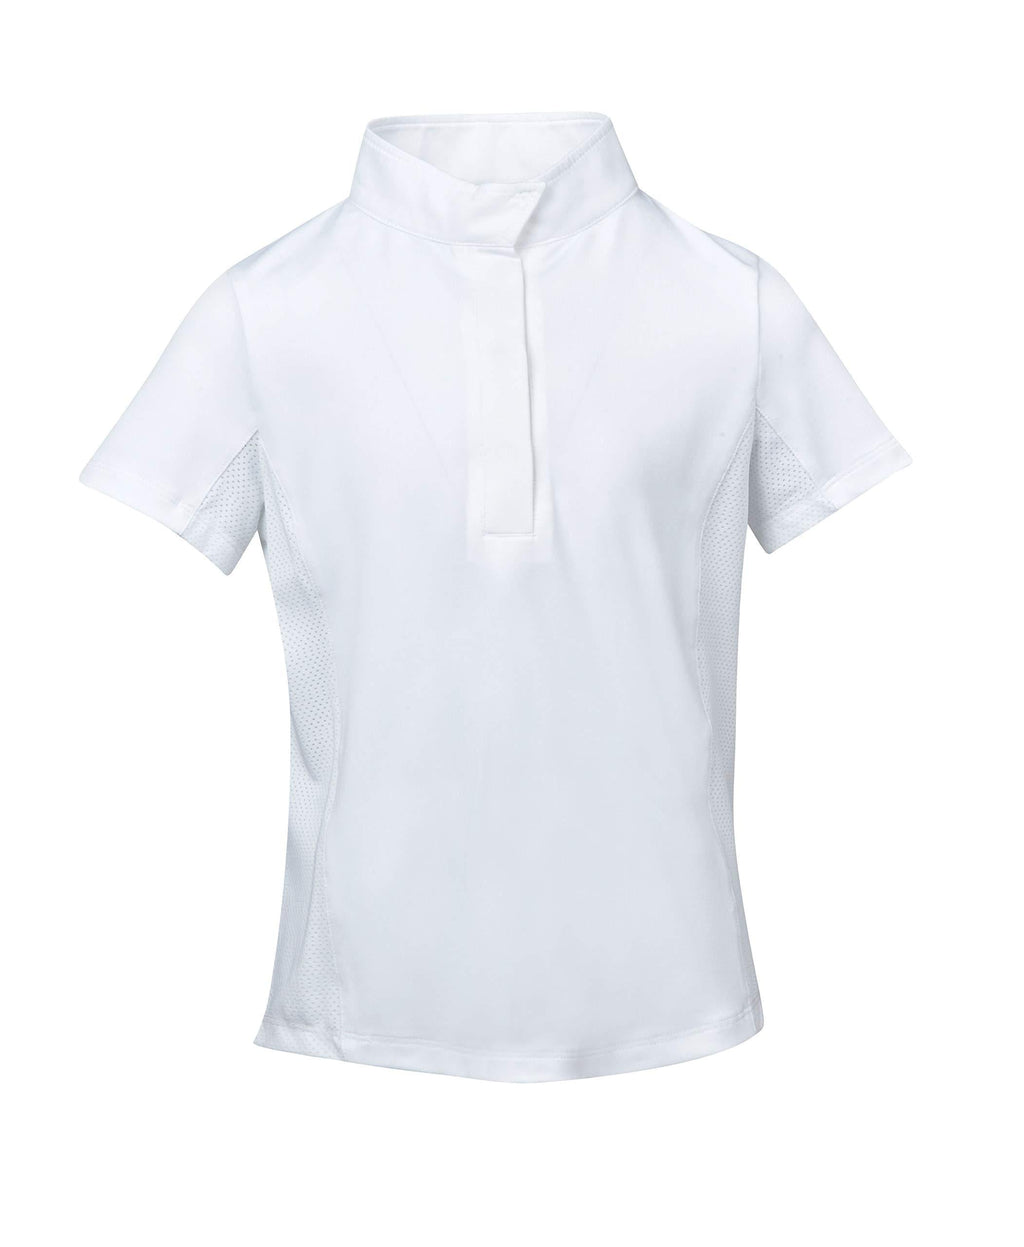 Dublin Ria Short Sleeve Competition Shirt White Ladies XSmall - PawsPlanet Australia